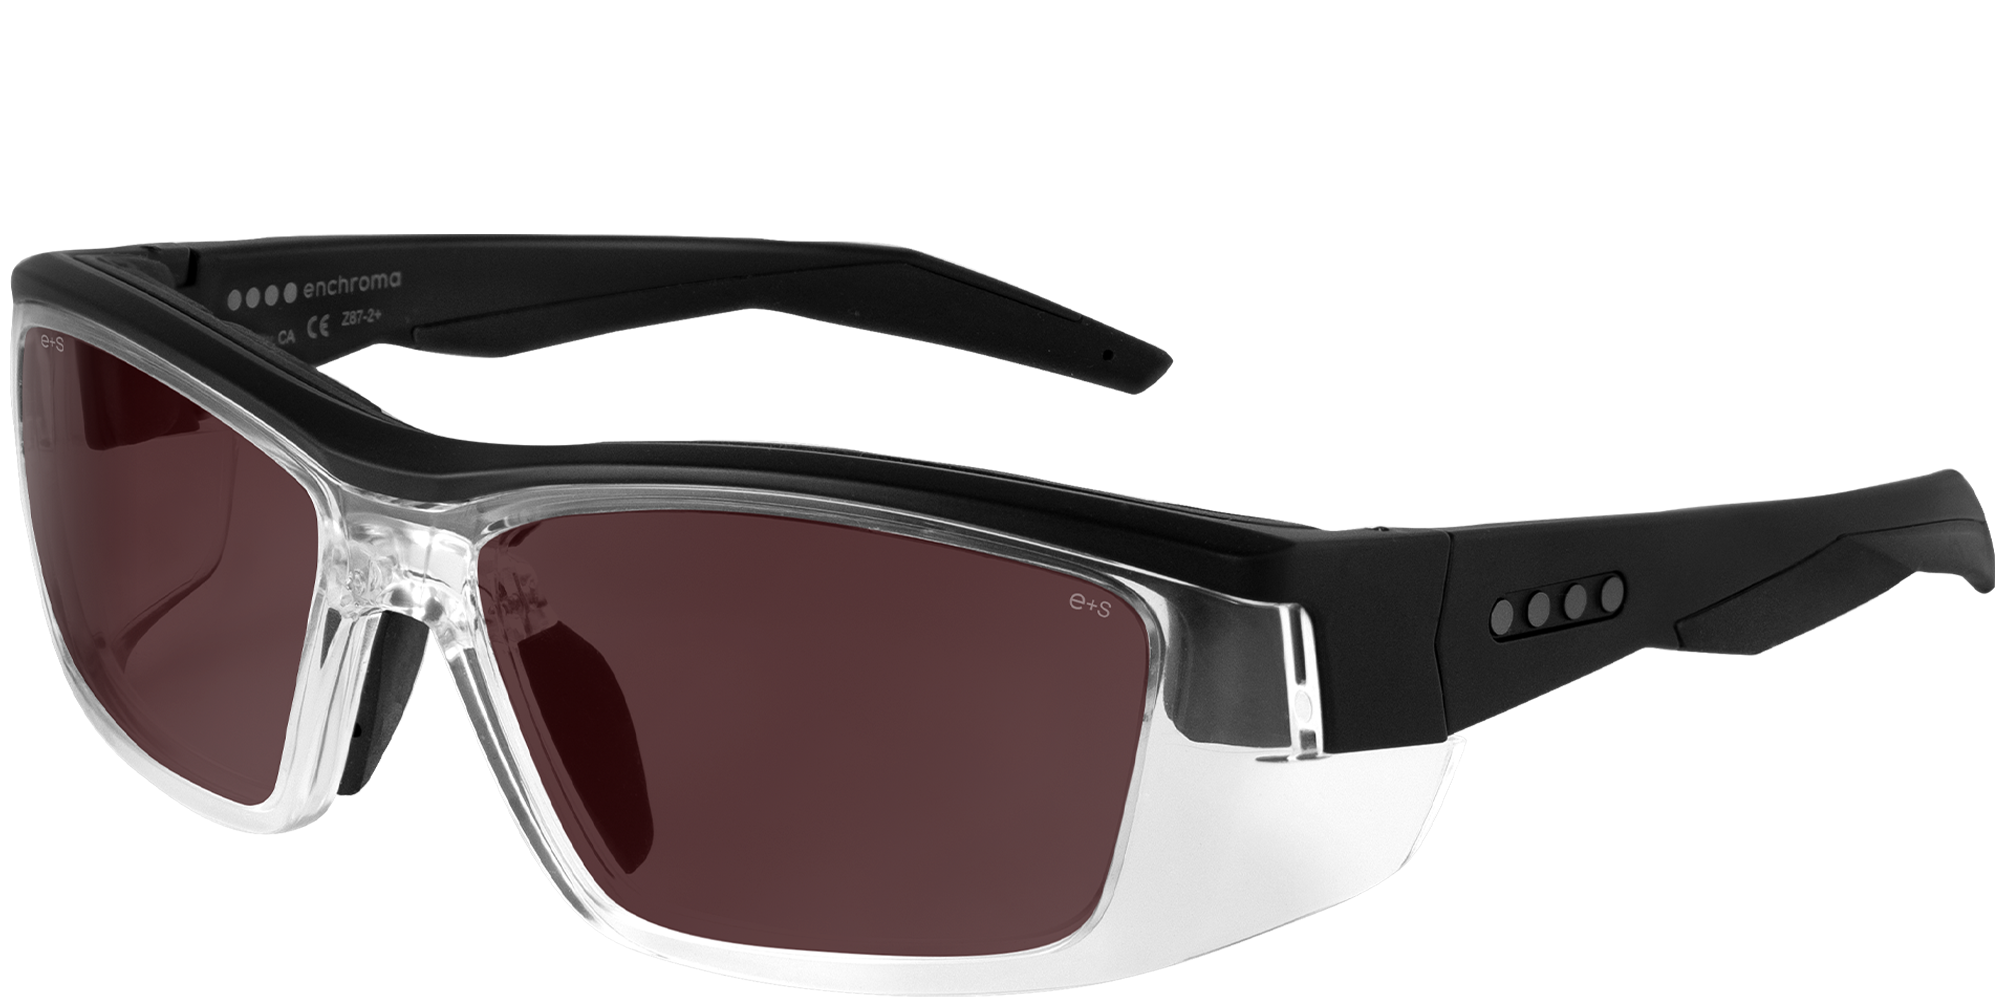 Martinez Polarized Protan Color Blind Safety Glasses